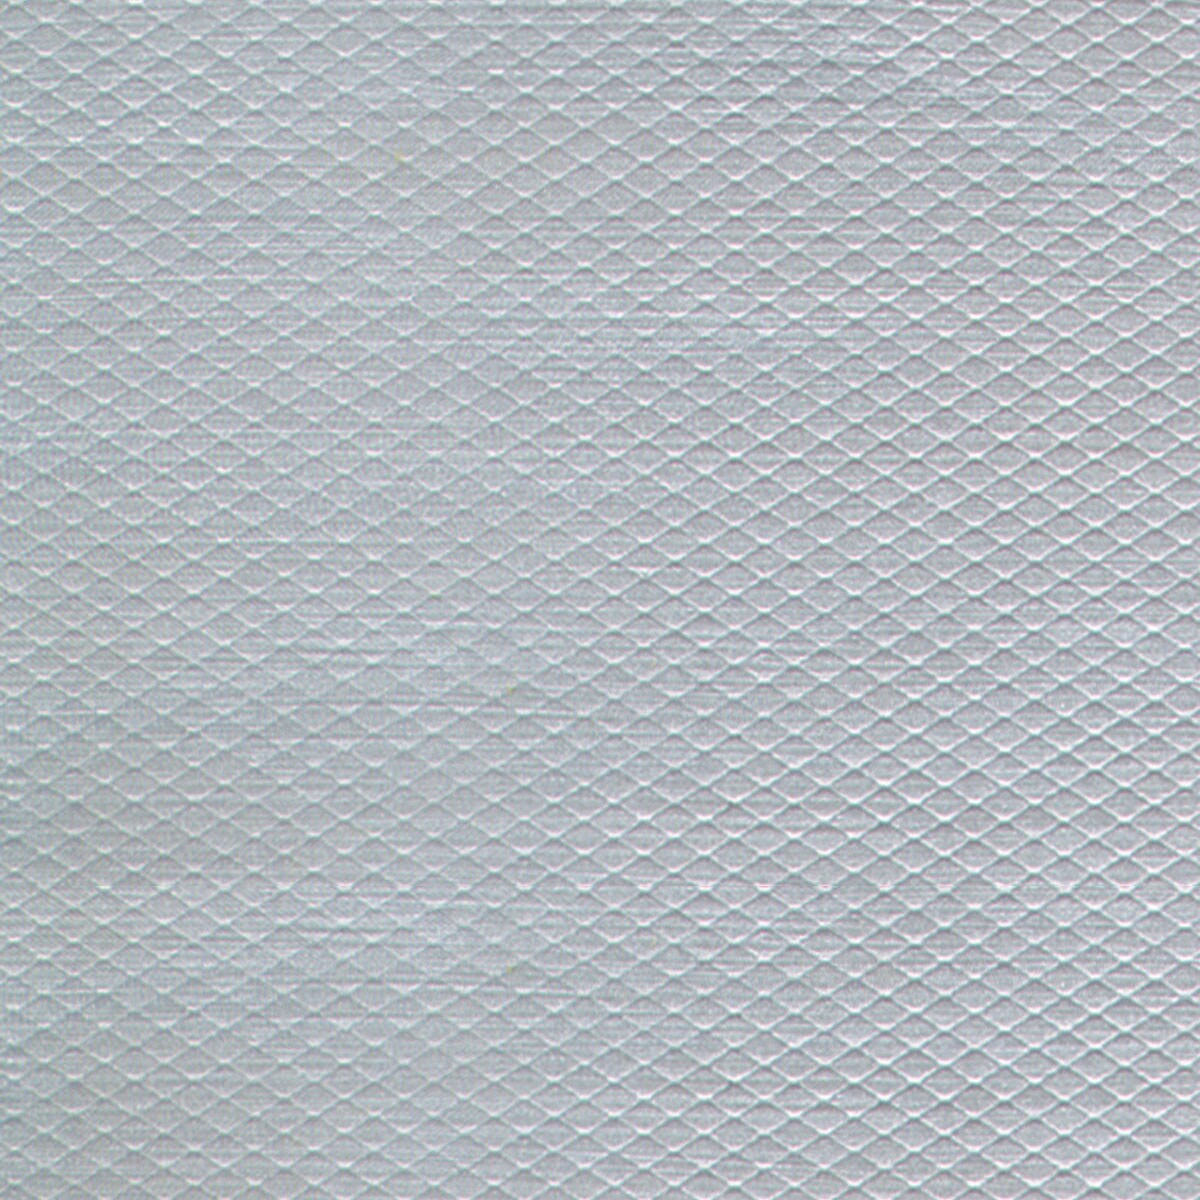 Plastruct Patterned Sheets, Tread Plate,&#xA0;1:100 Scale